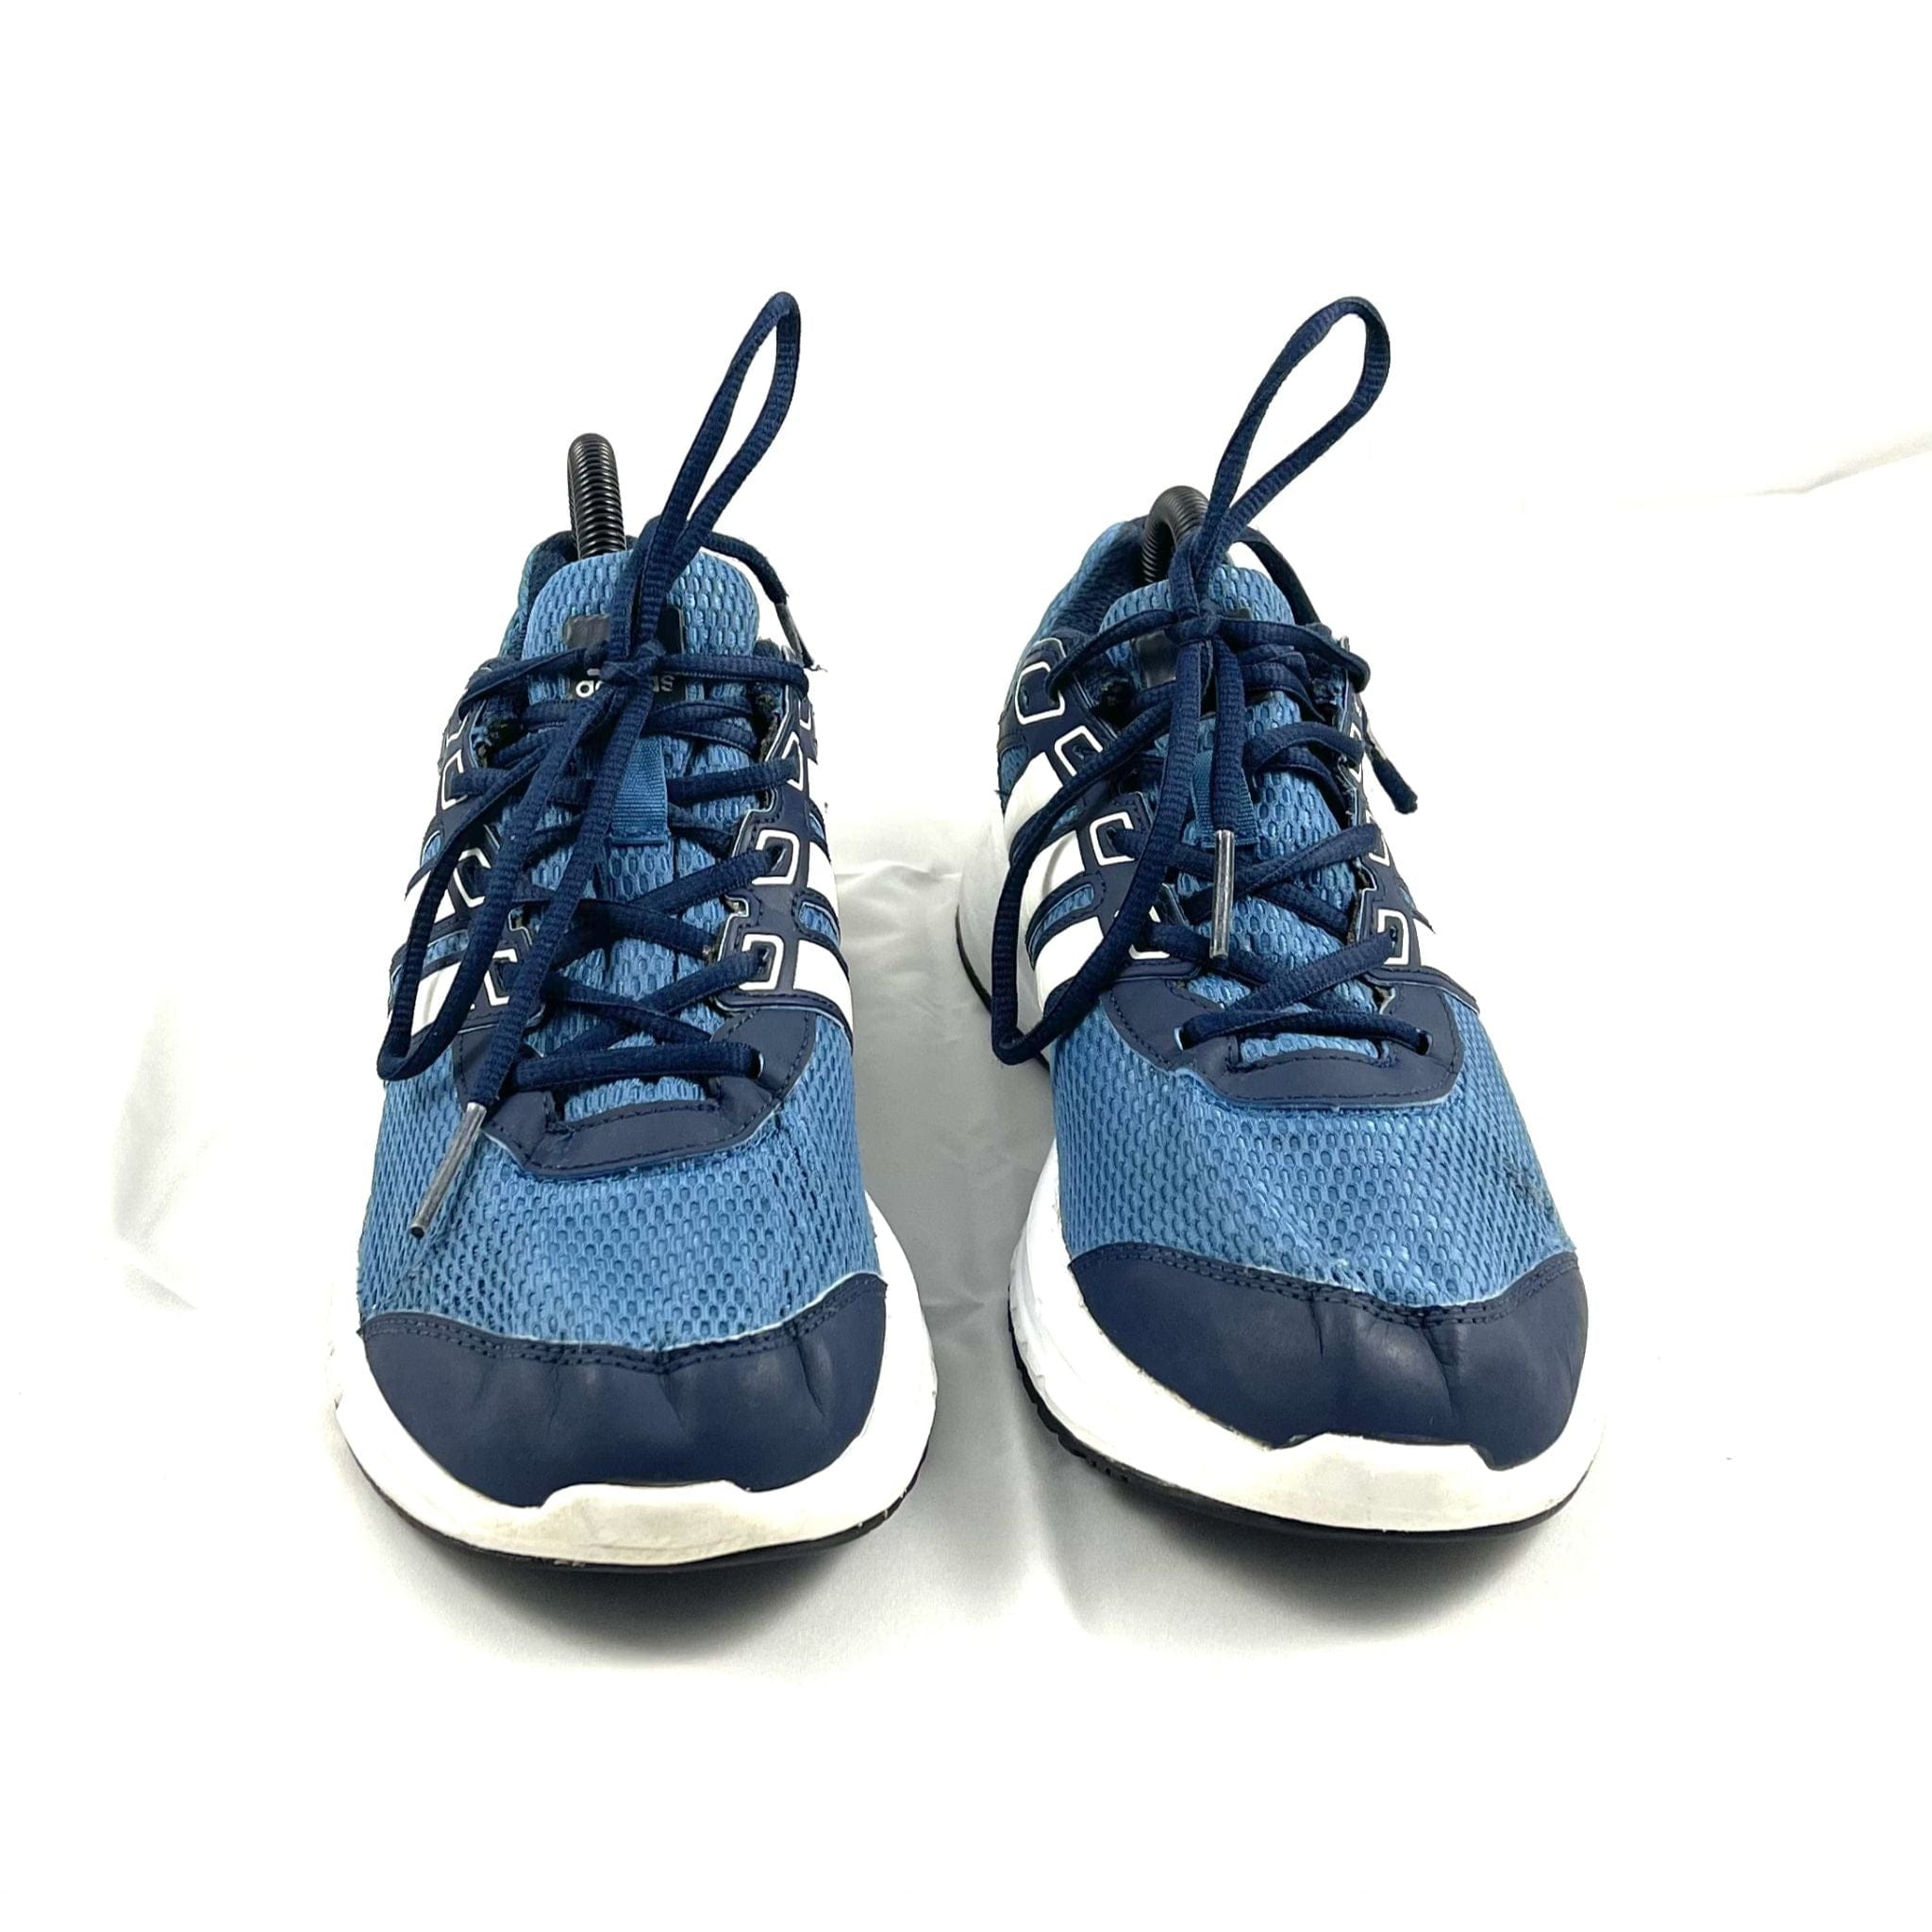 Blue Adidas Sneakers